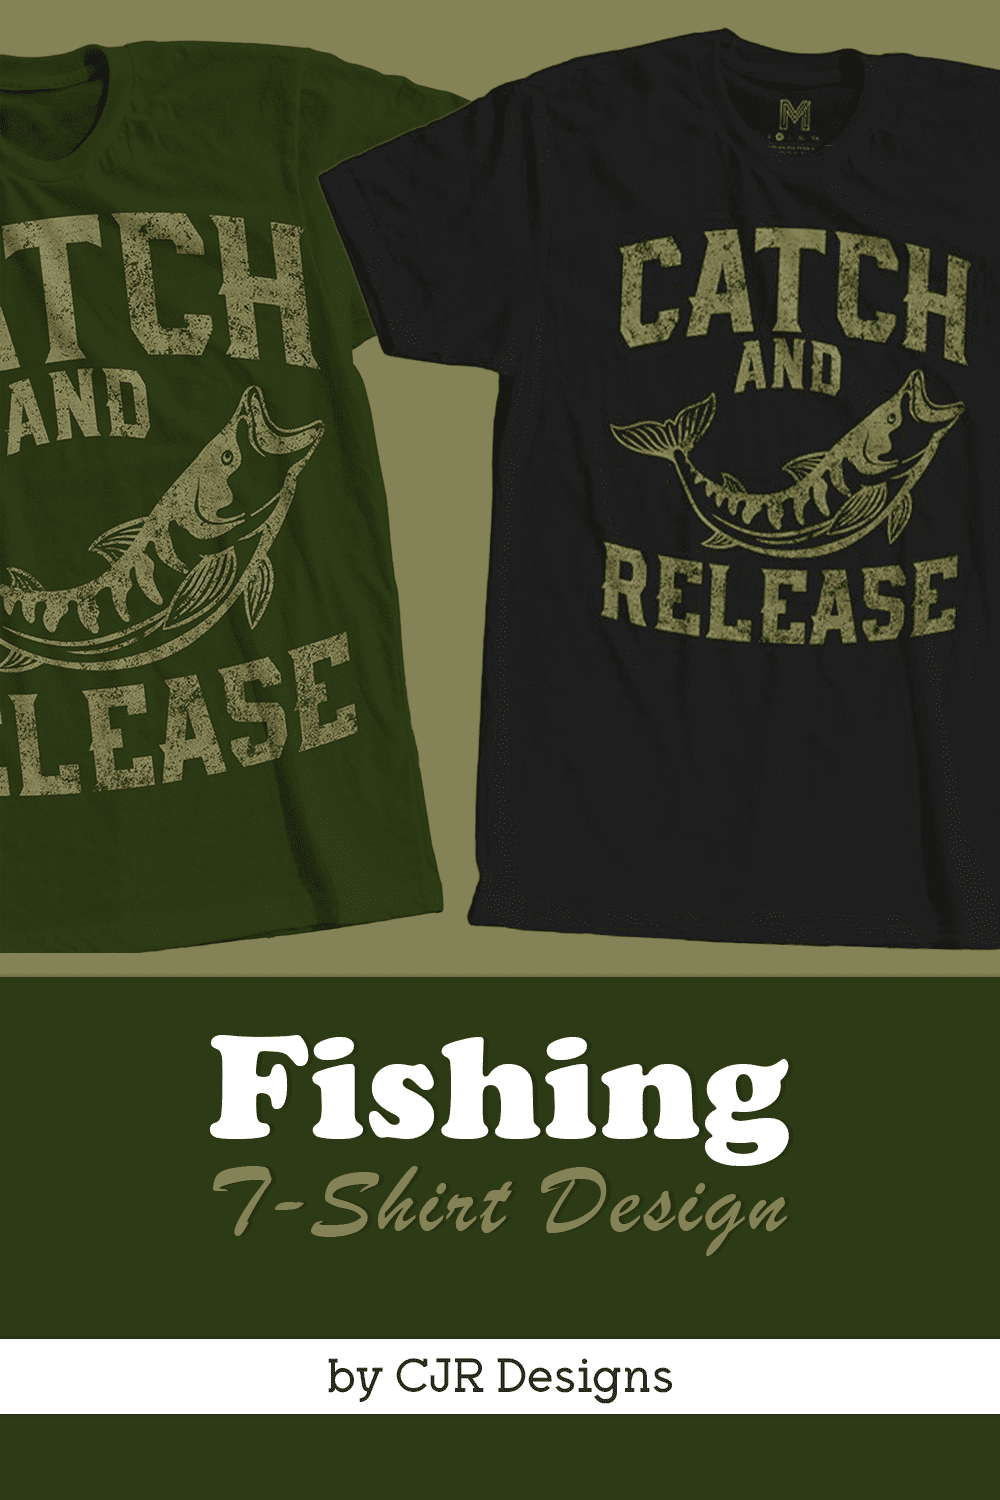 Black and dark green T-shirt with adorable predatory fish prints.